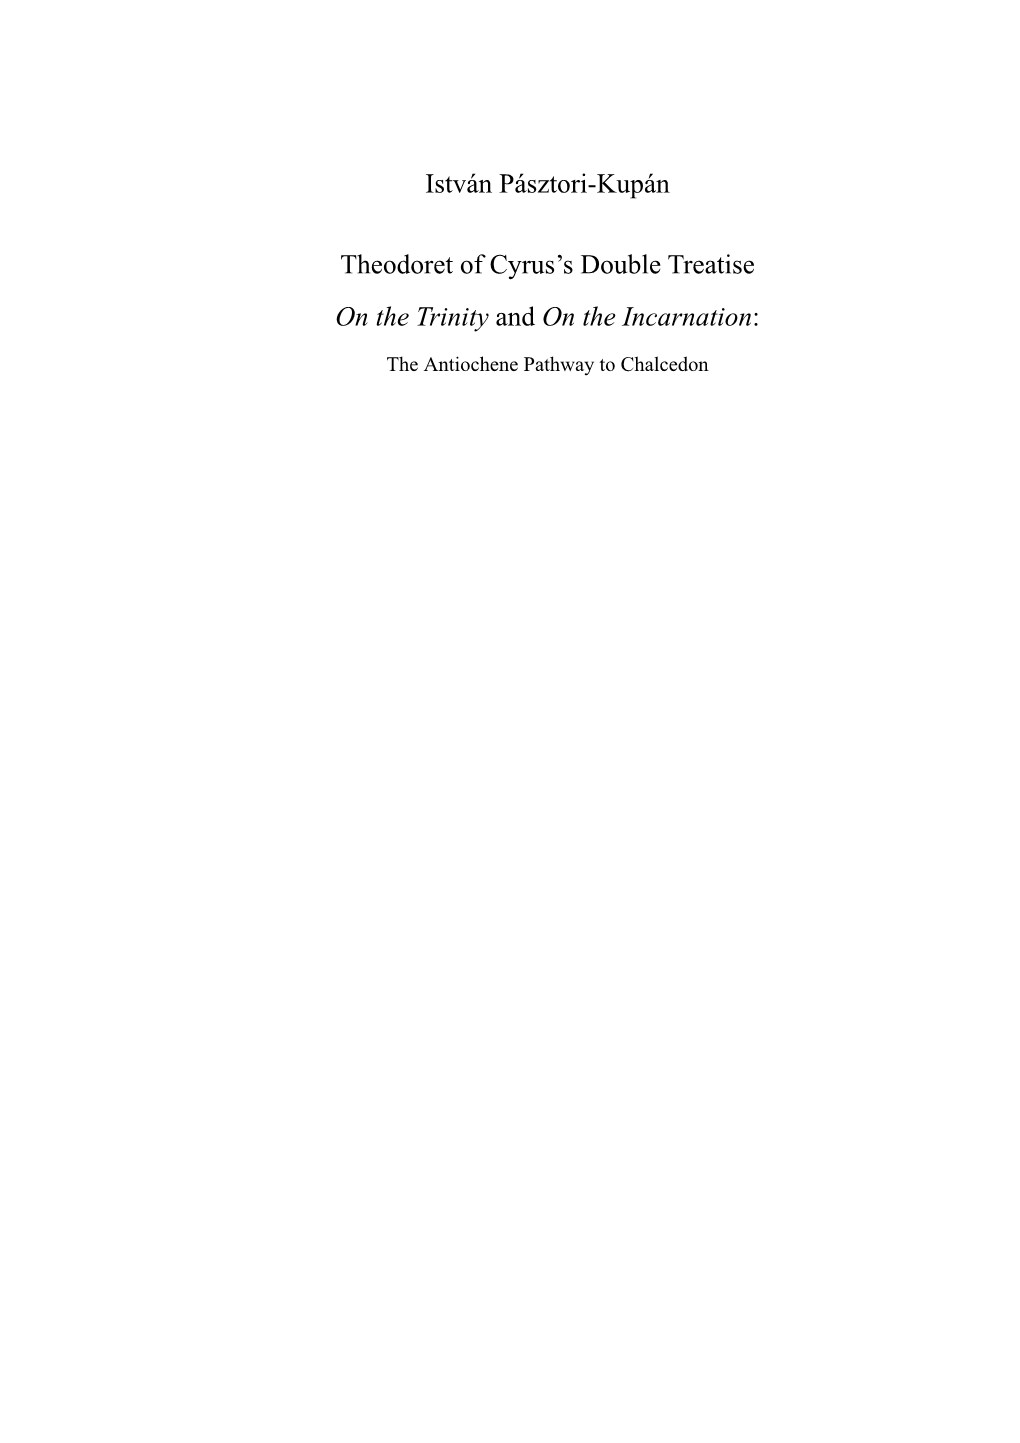 István Pásztori-Kupán Theodoret of Cyrus's Double Treatise on The